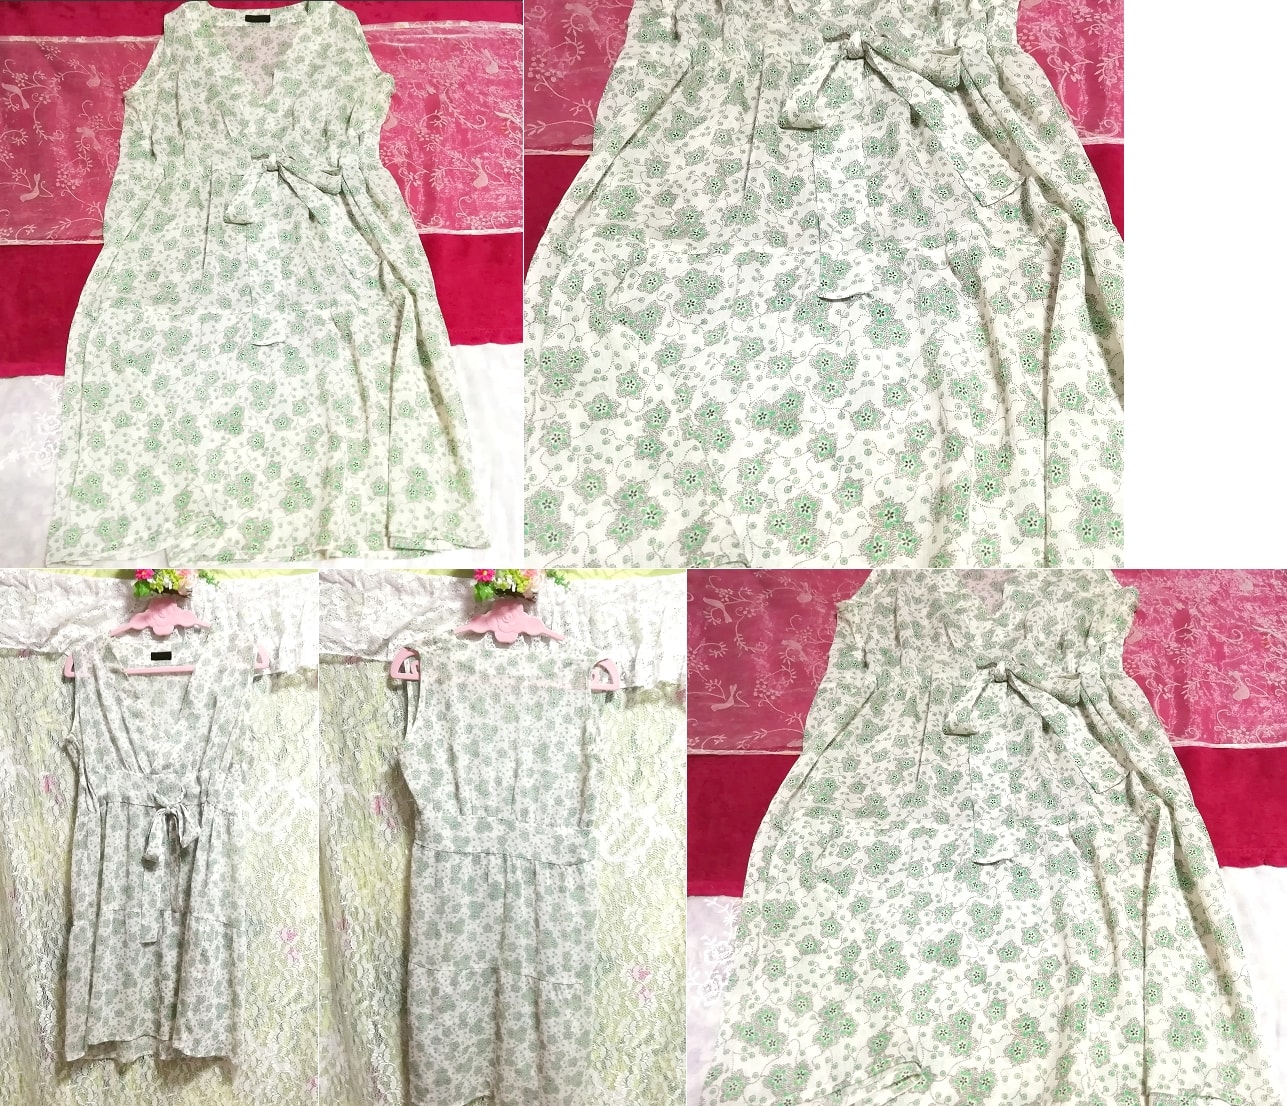 Green green floral print chiffon see-through sleeveless negligee nightgown dress, mini skirt, m size